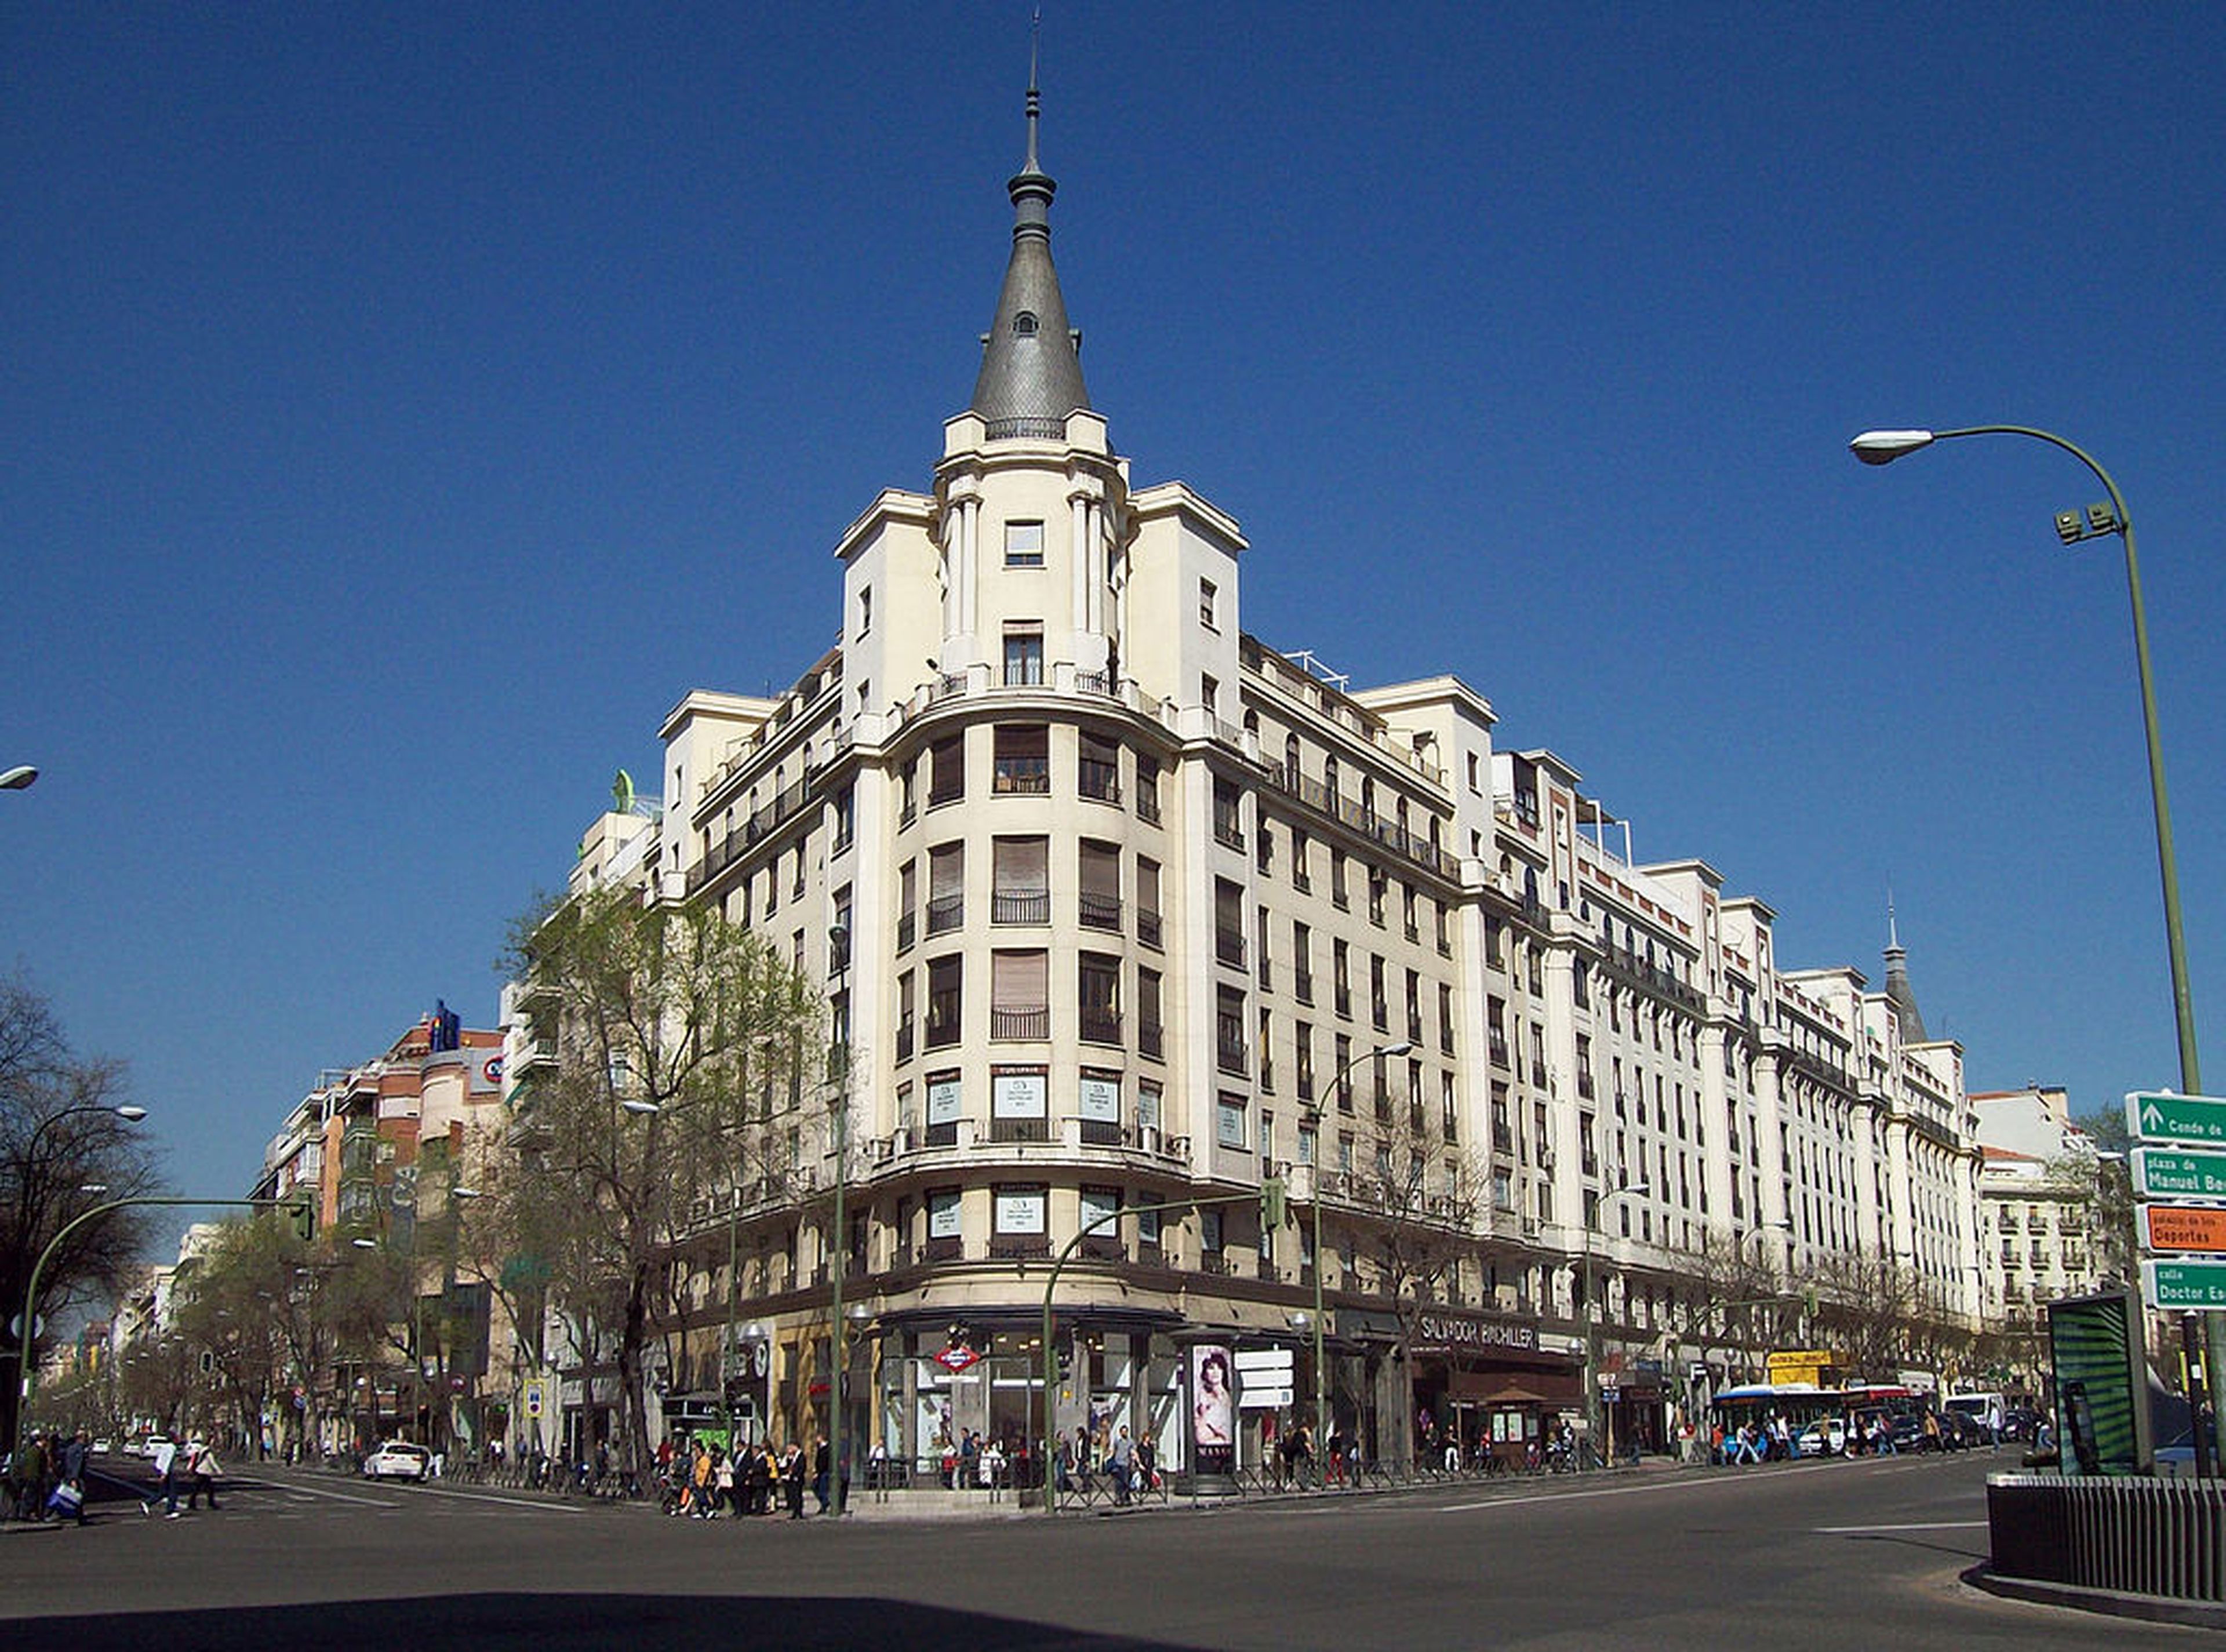 Barrio salamanca, Madrid